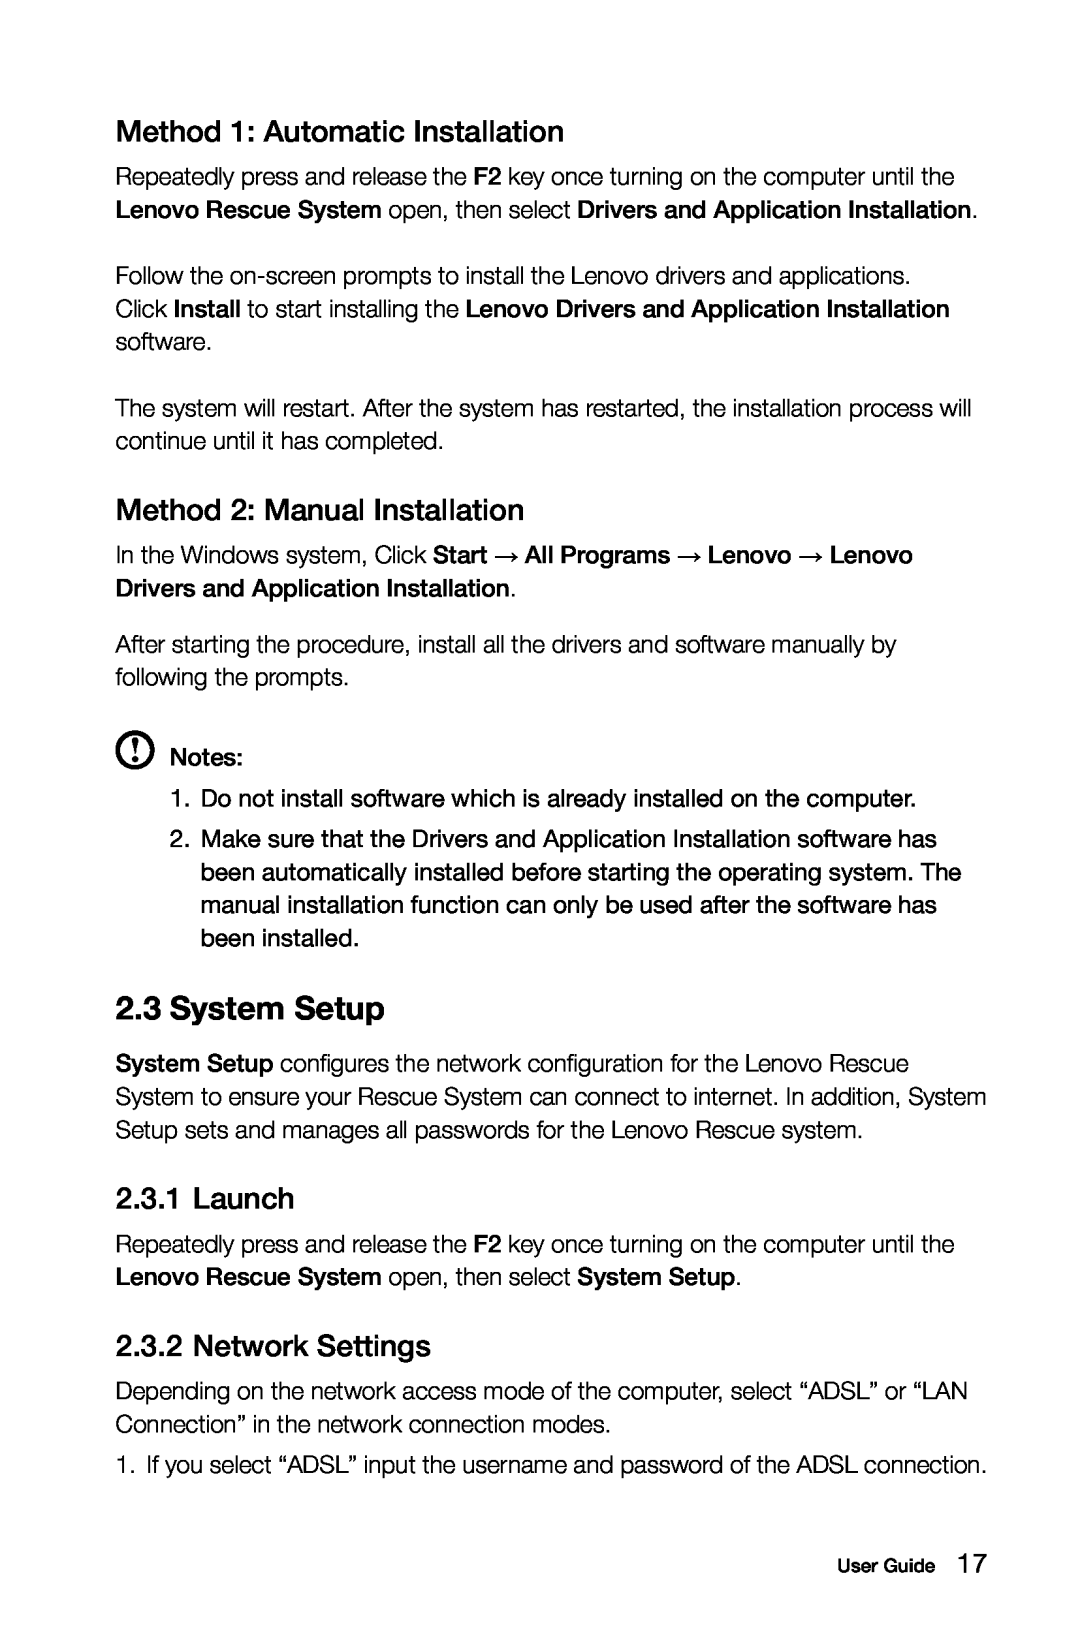 Lenovo K3 manual System Setup, Method 1 Automatic Installation, Method 2 Manual Installation, Launch, Network Settings 